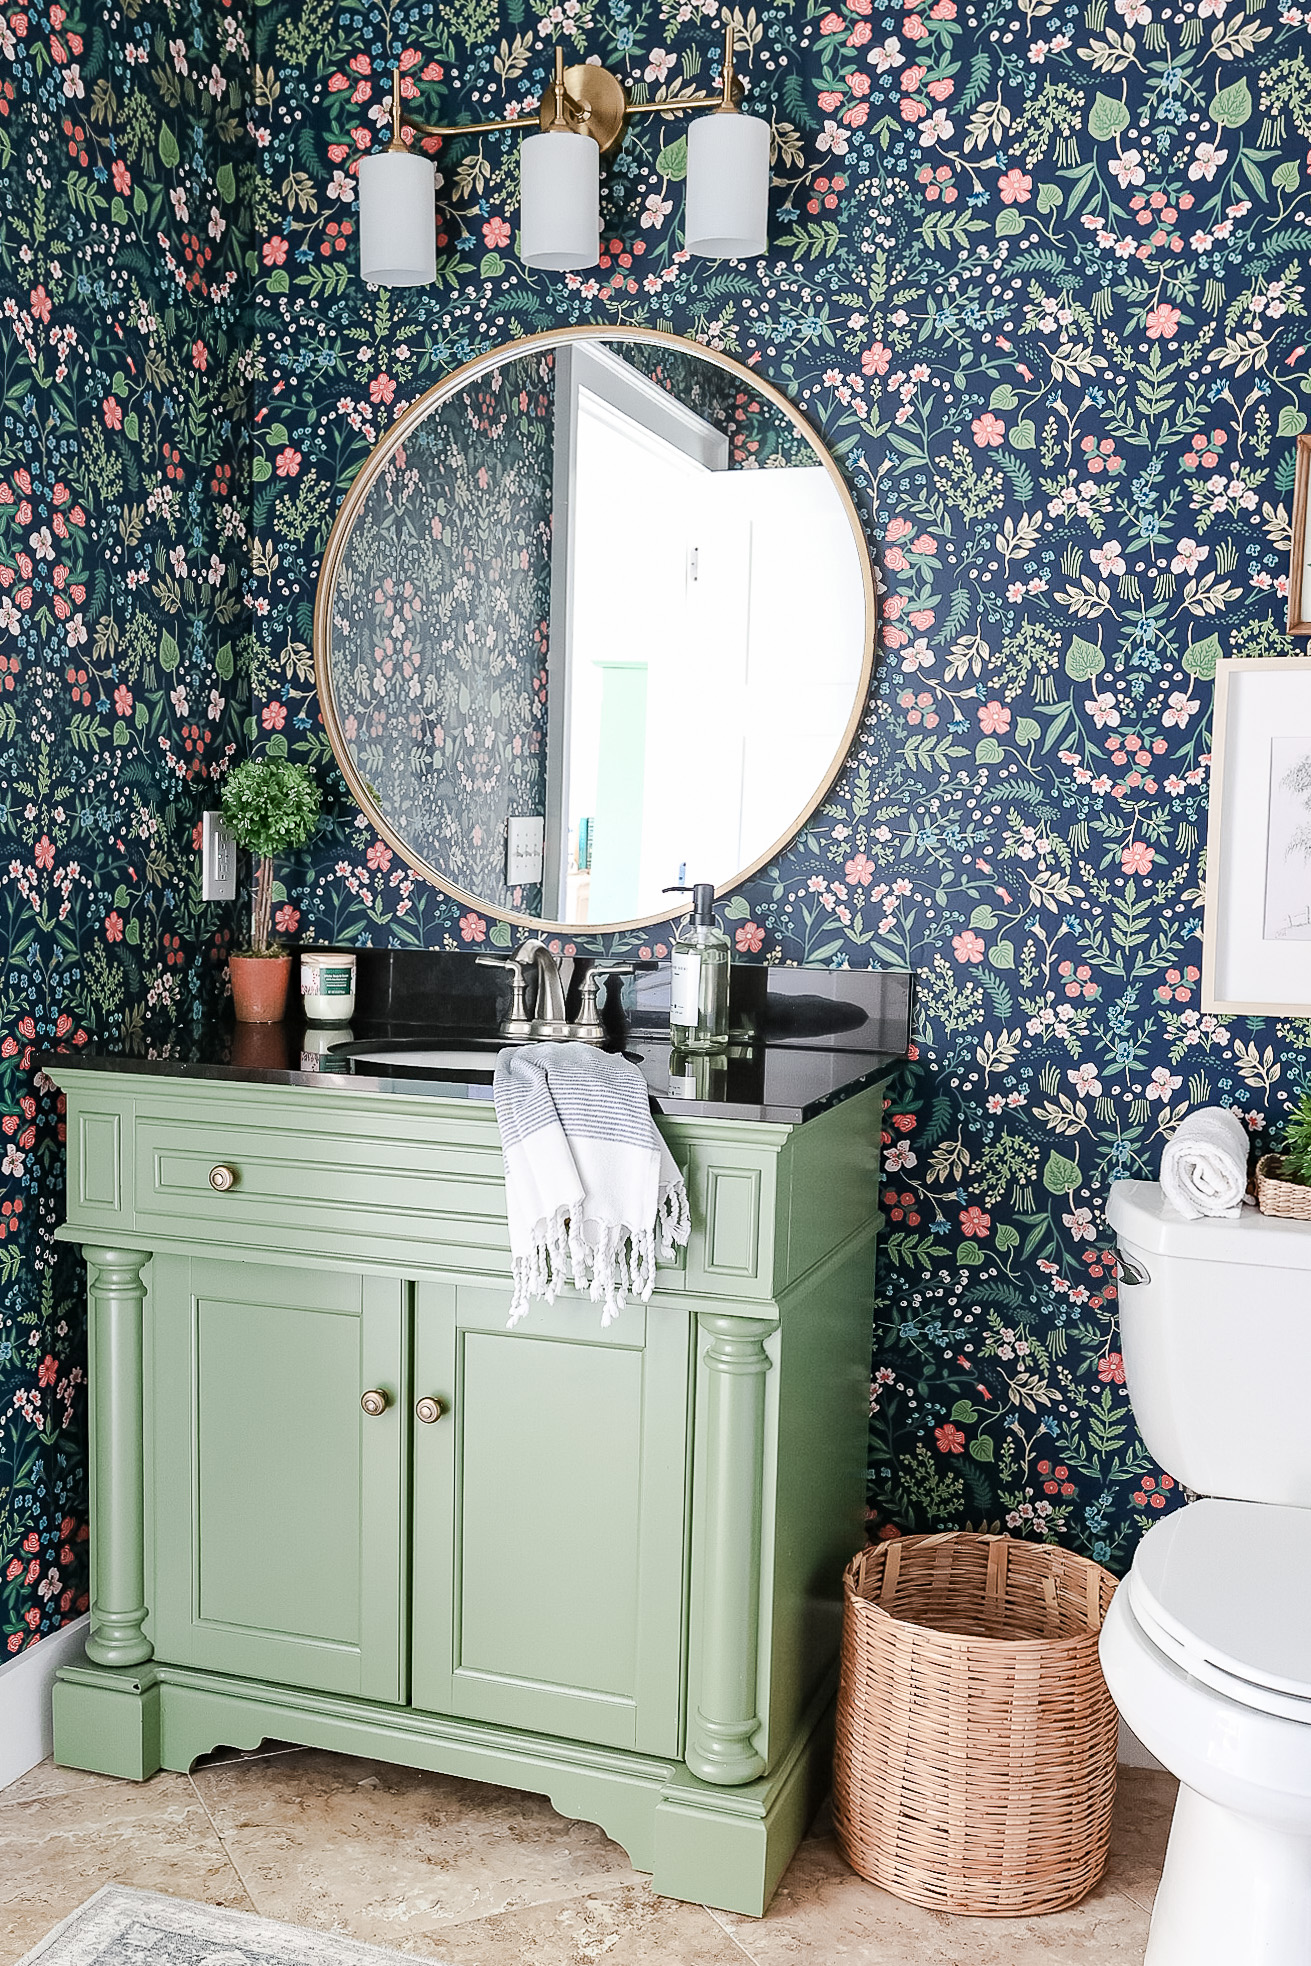 installing wallpaper in bathroom with green vanity